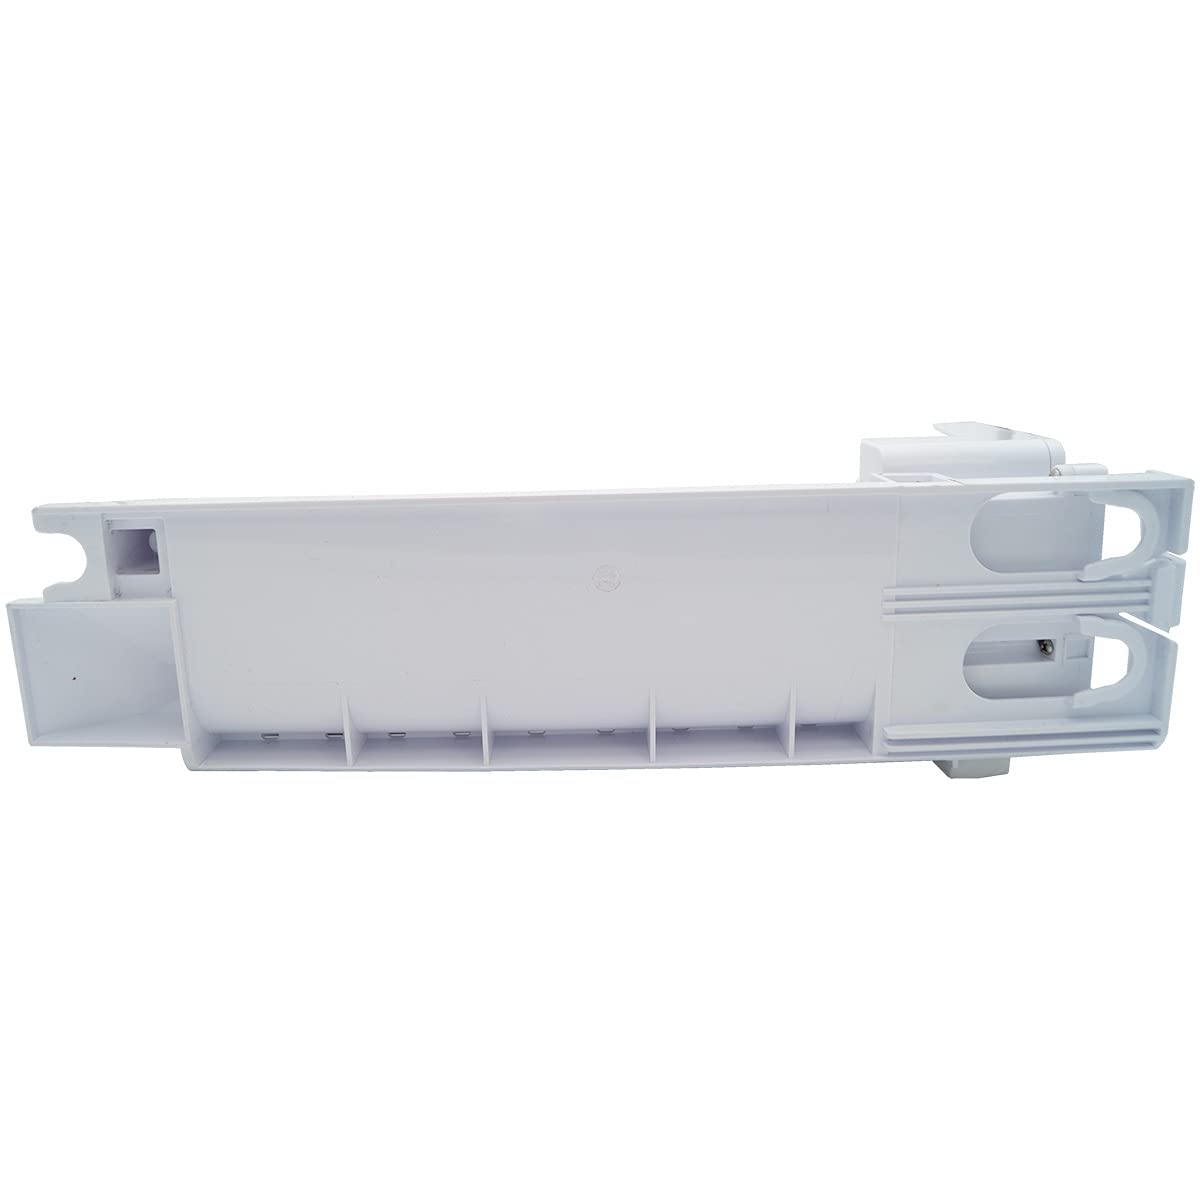 Supplying Demand DA97-15217D DA97-15217B Refrigerator Ice Maker Assembly Replacement Model Specific Not Universal